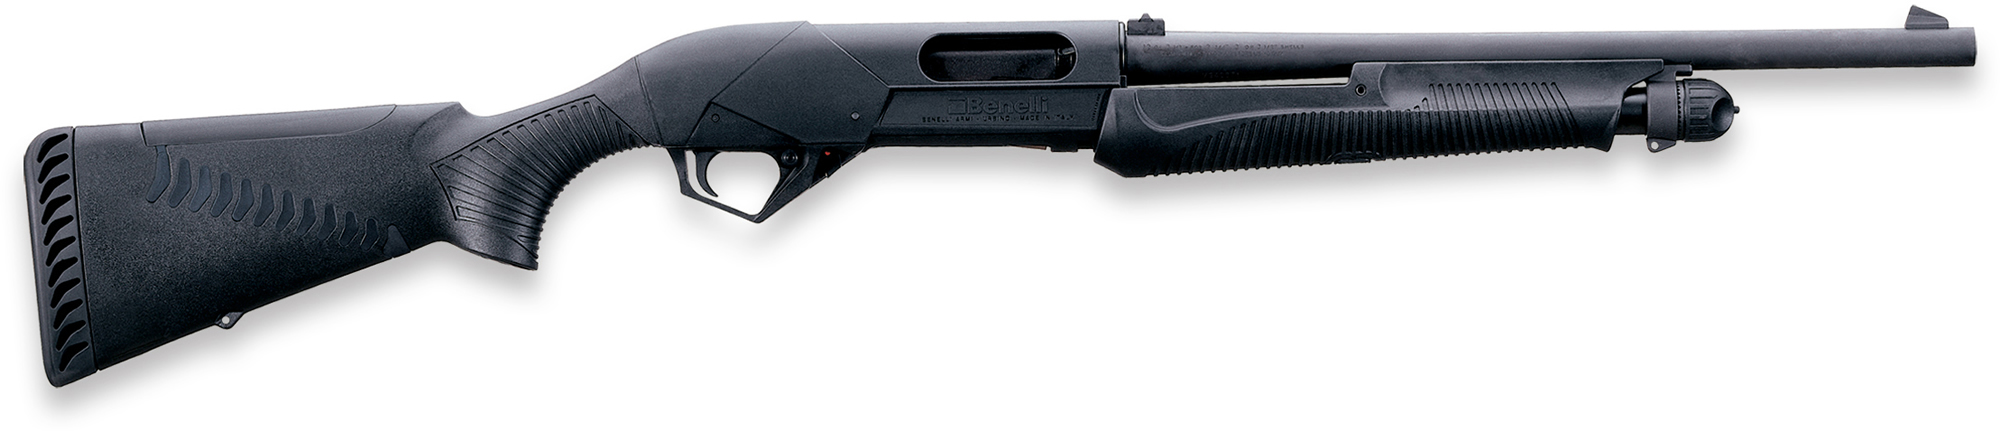 Benelli Super Nova Tactical Pump Shotgun 20145, 12 Gauge, 18", Rifle Sight Barrel, 3.5" Chmbr, Synthetic Stock, Matte Finish